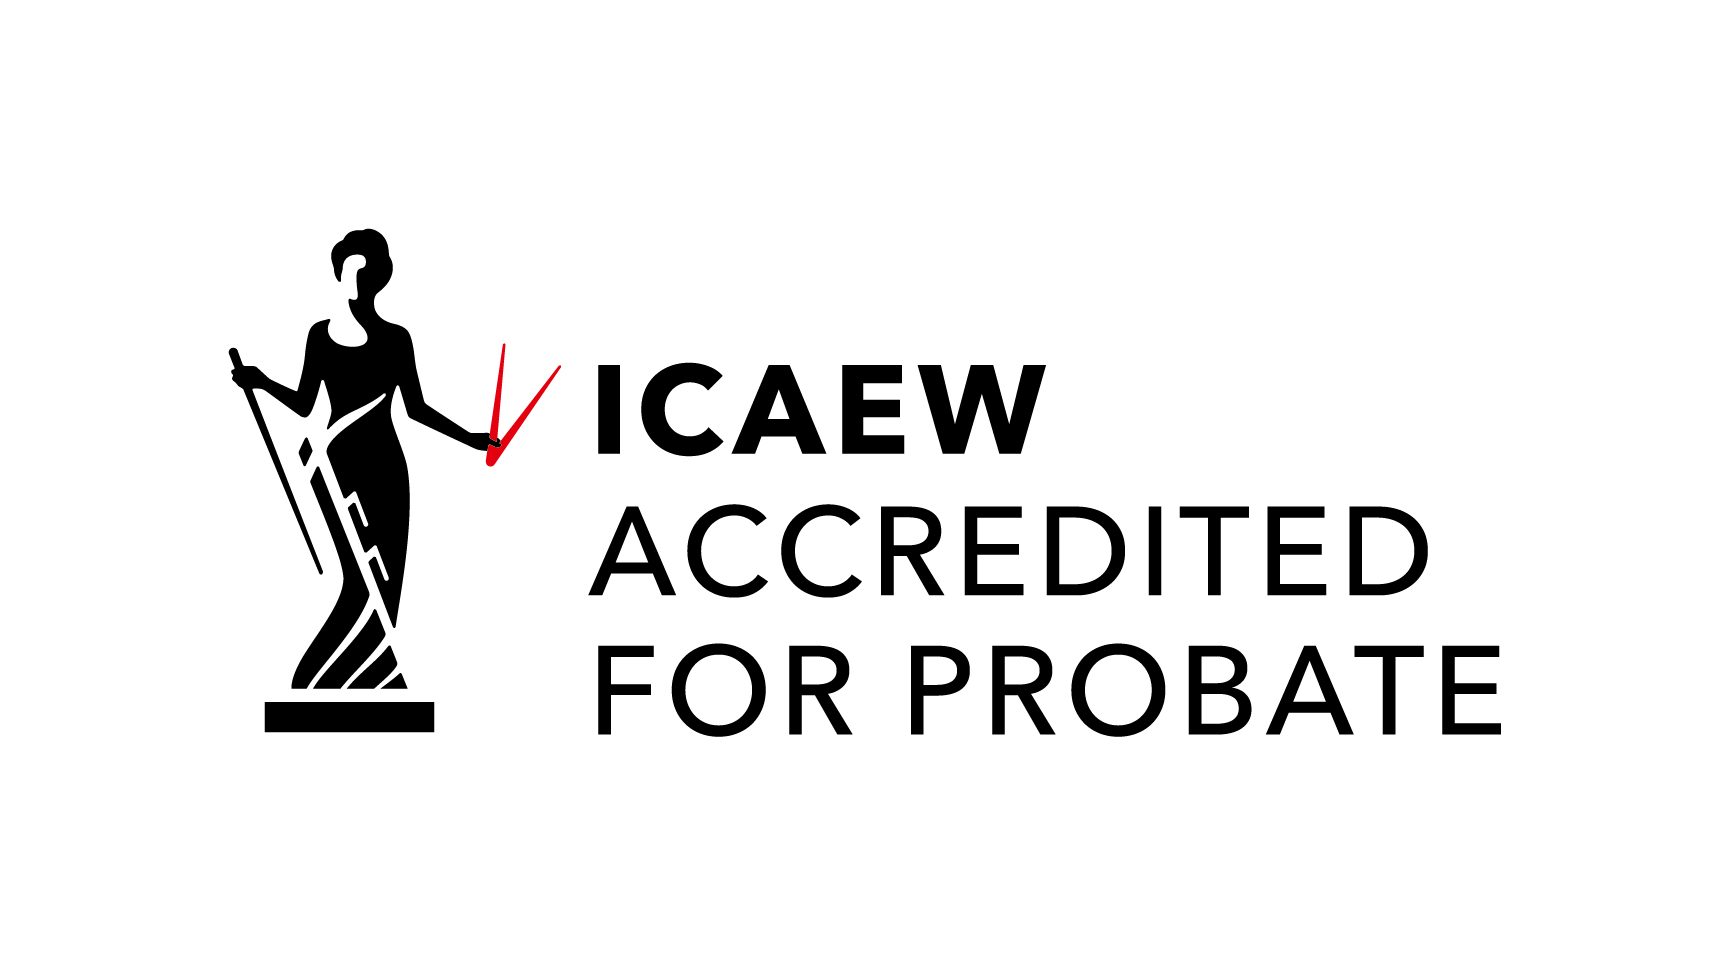 ICAEW probate accreditation logo